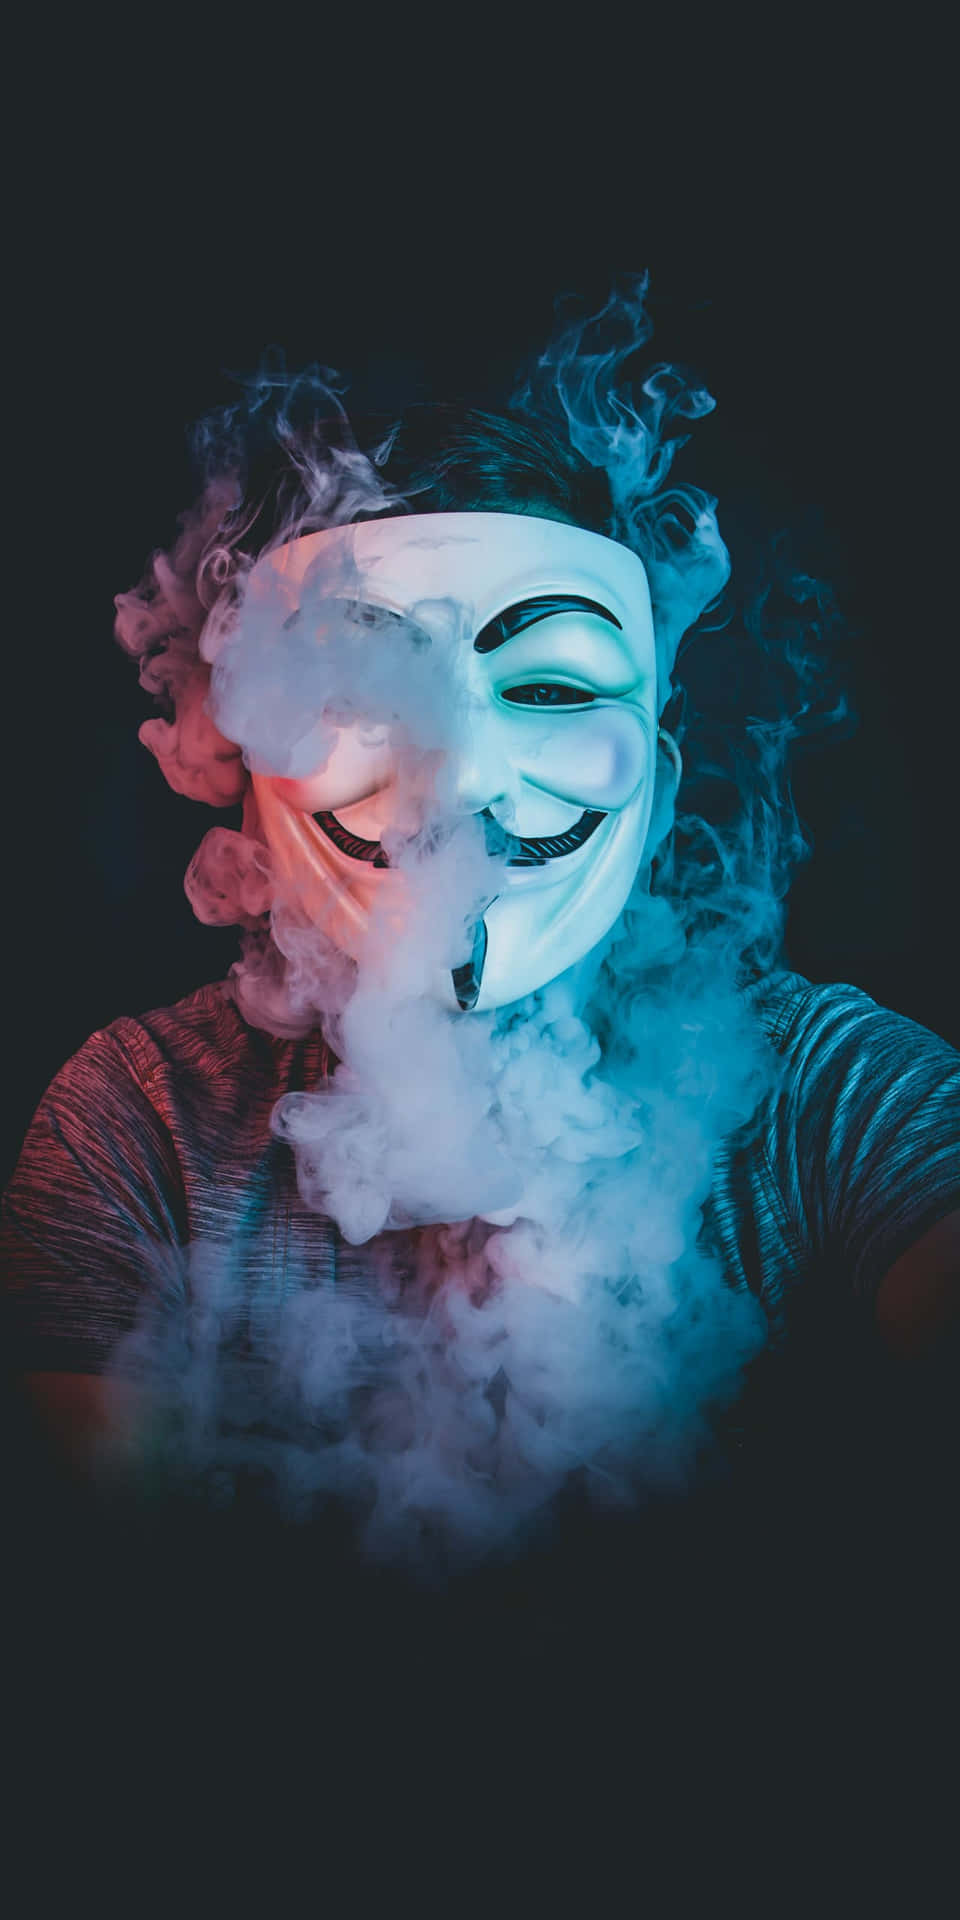 A Man In A Mask Smoking A Cigarette Wallpaper